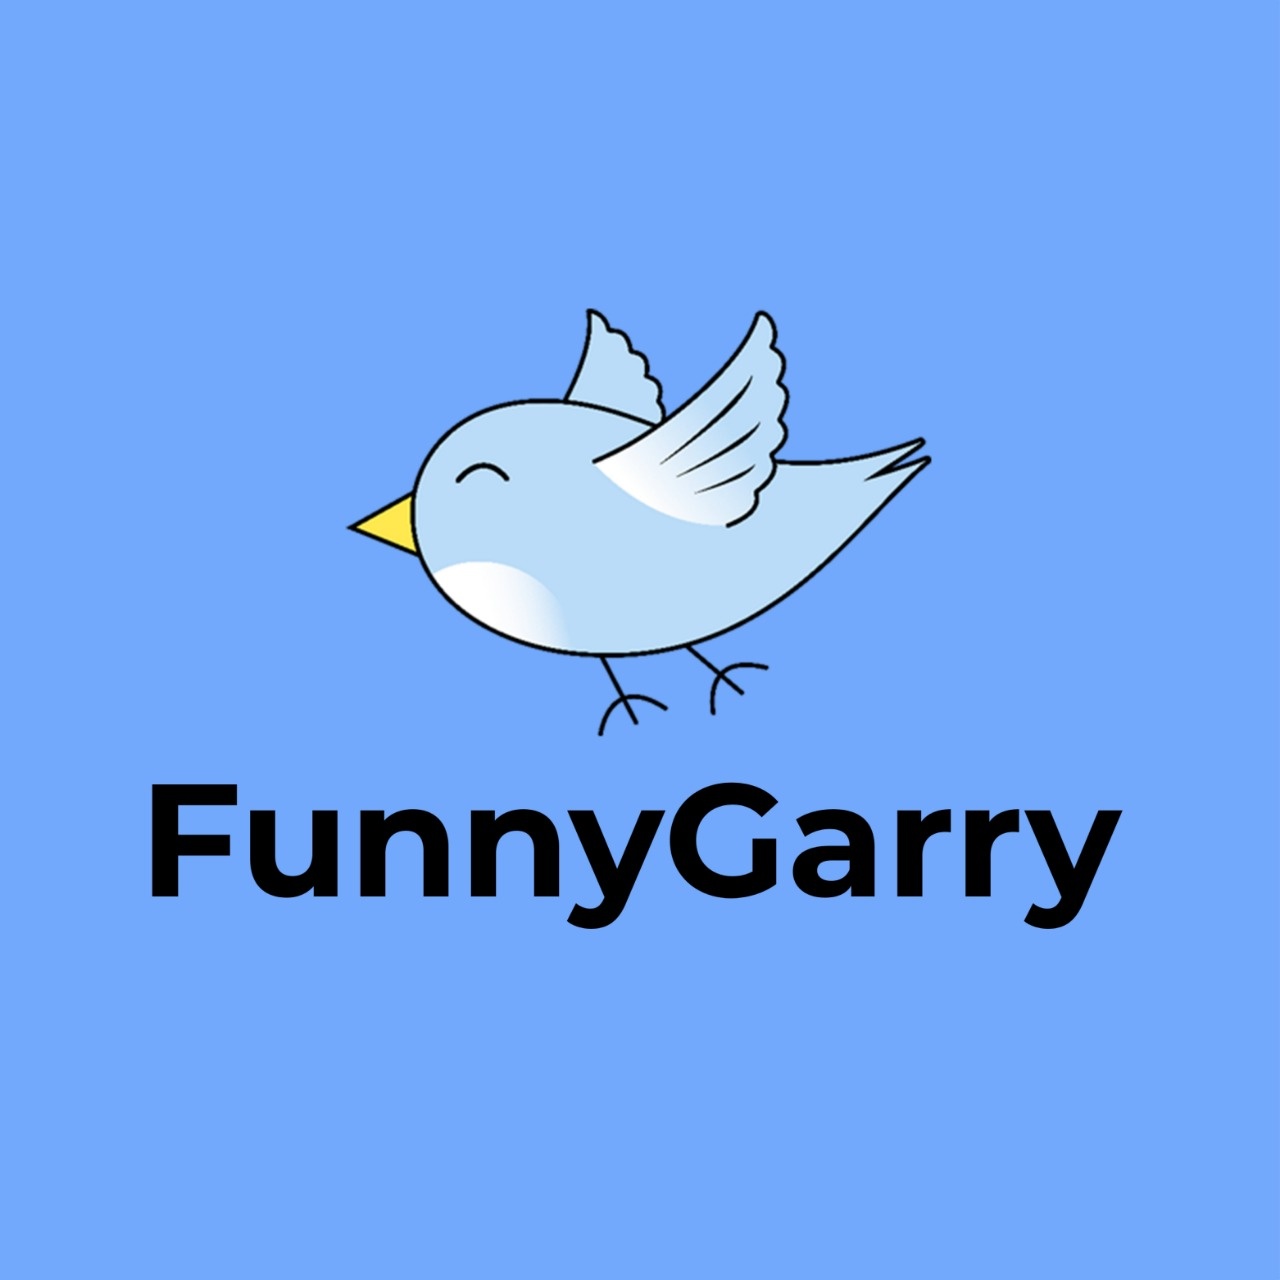 FunnyGarry